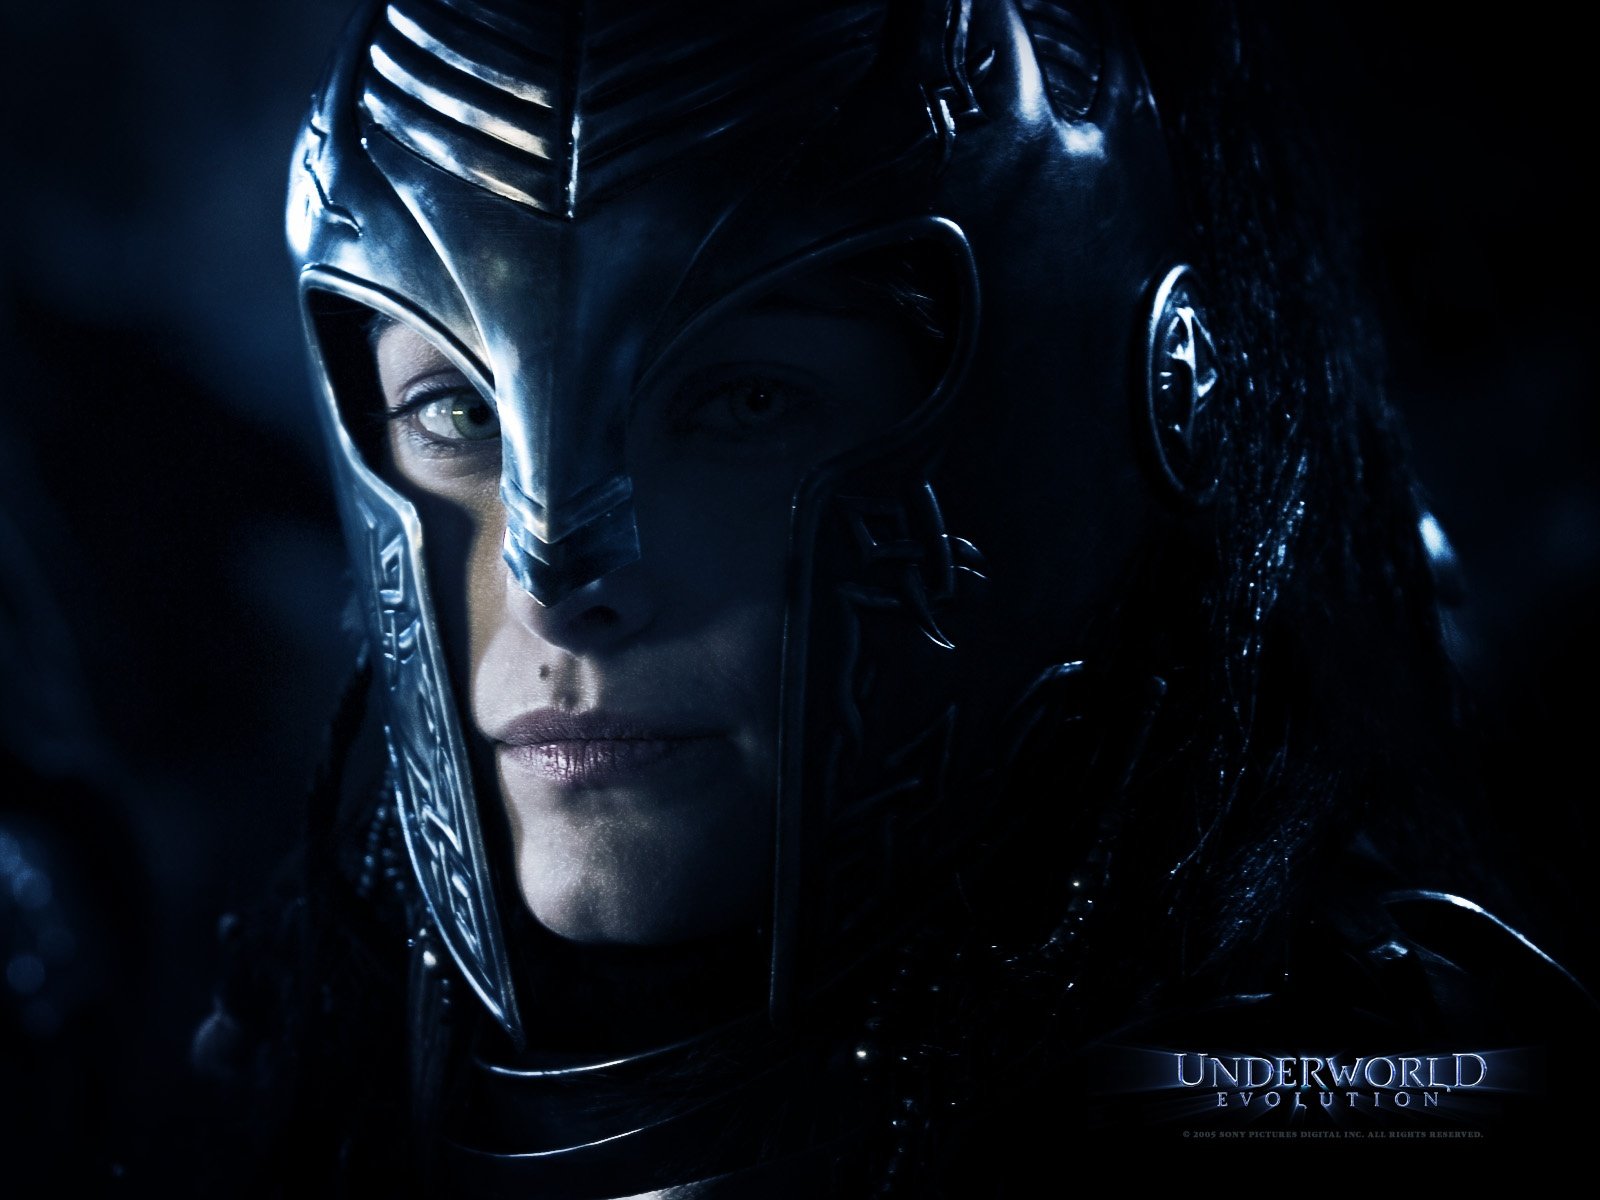 Underworld Action Fantasy Thriller Dark Warrior Armor - Underworld Evolution Armor - HD Wallpaper 